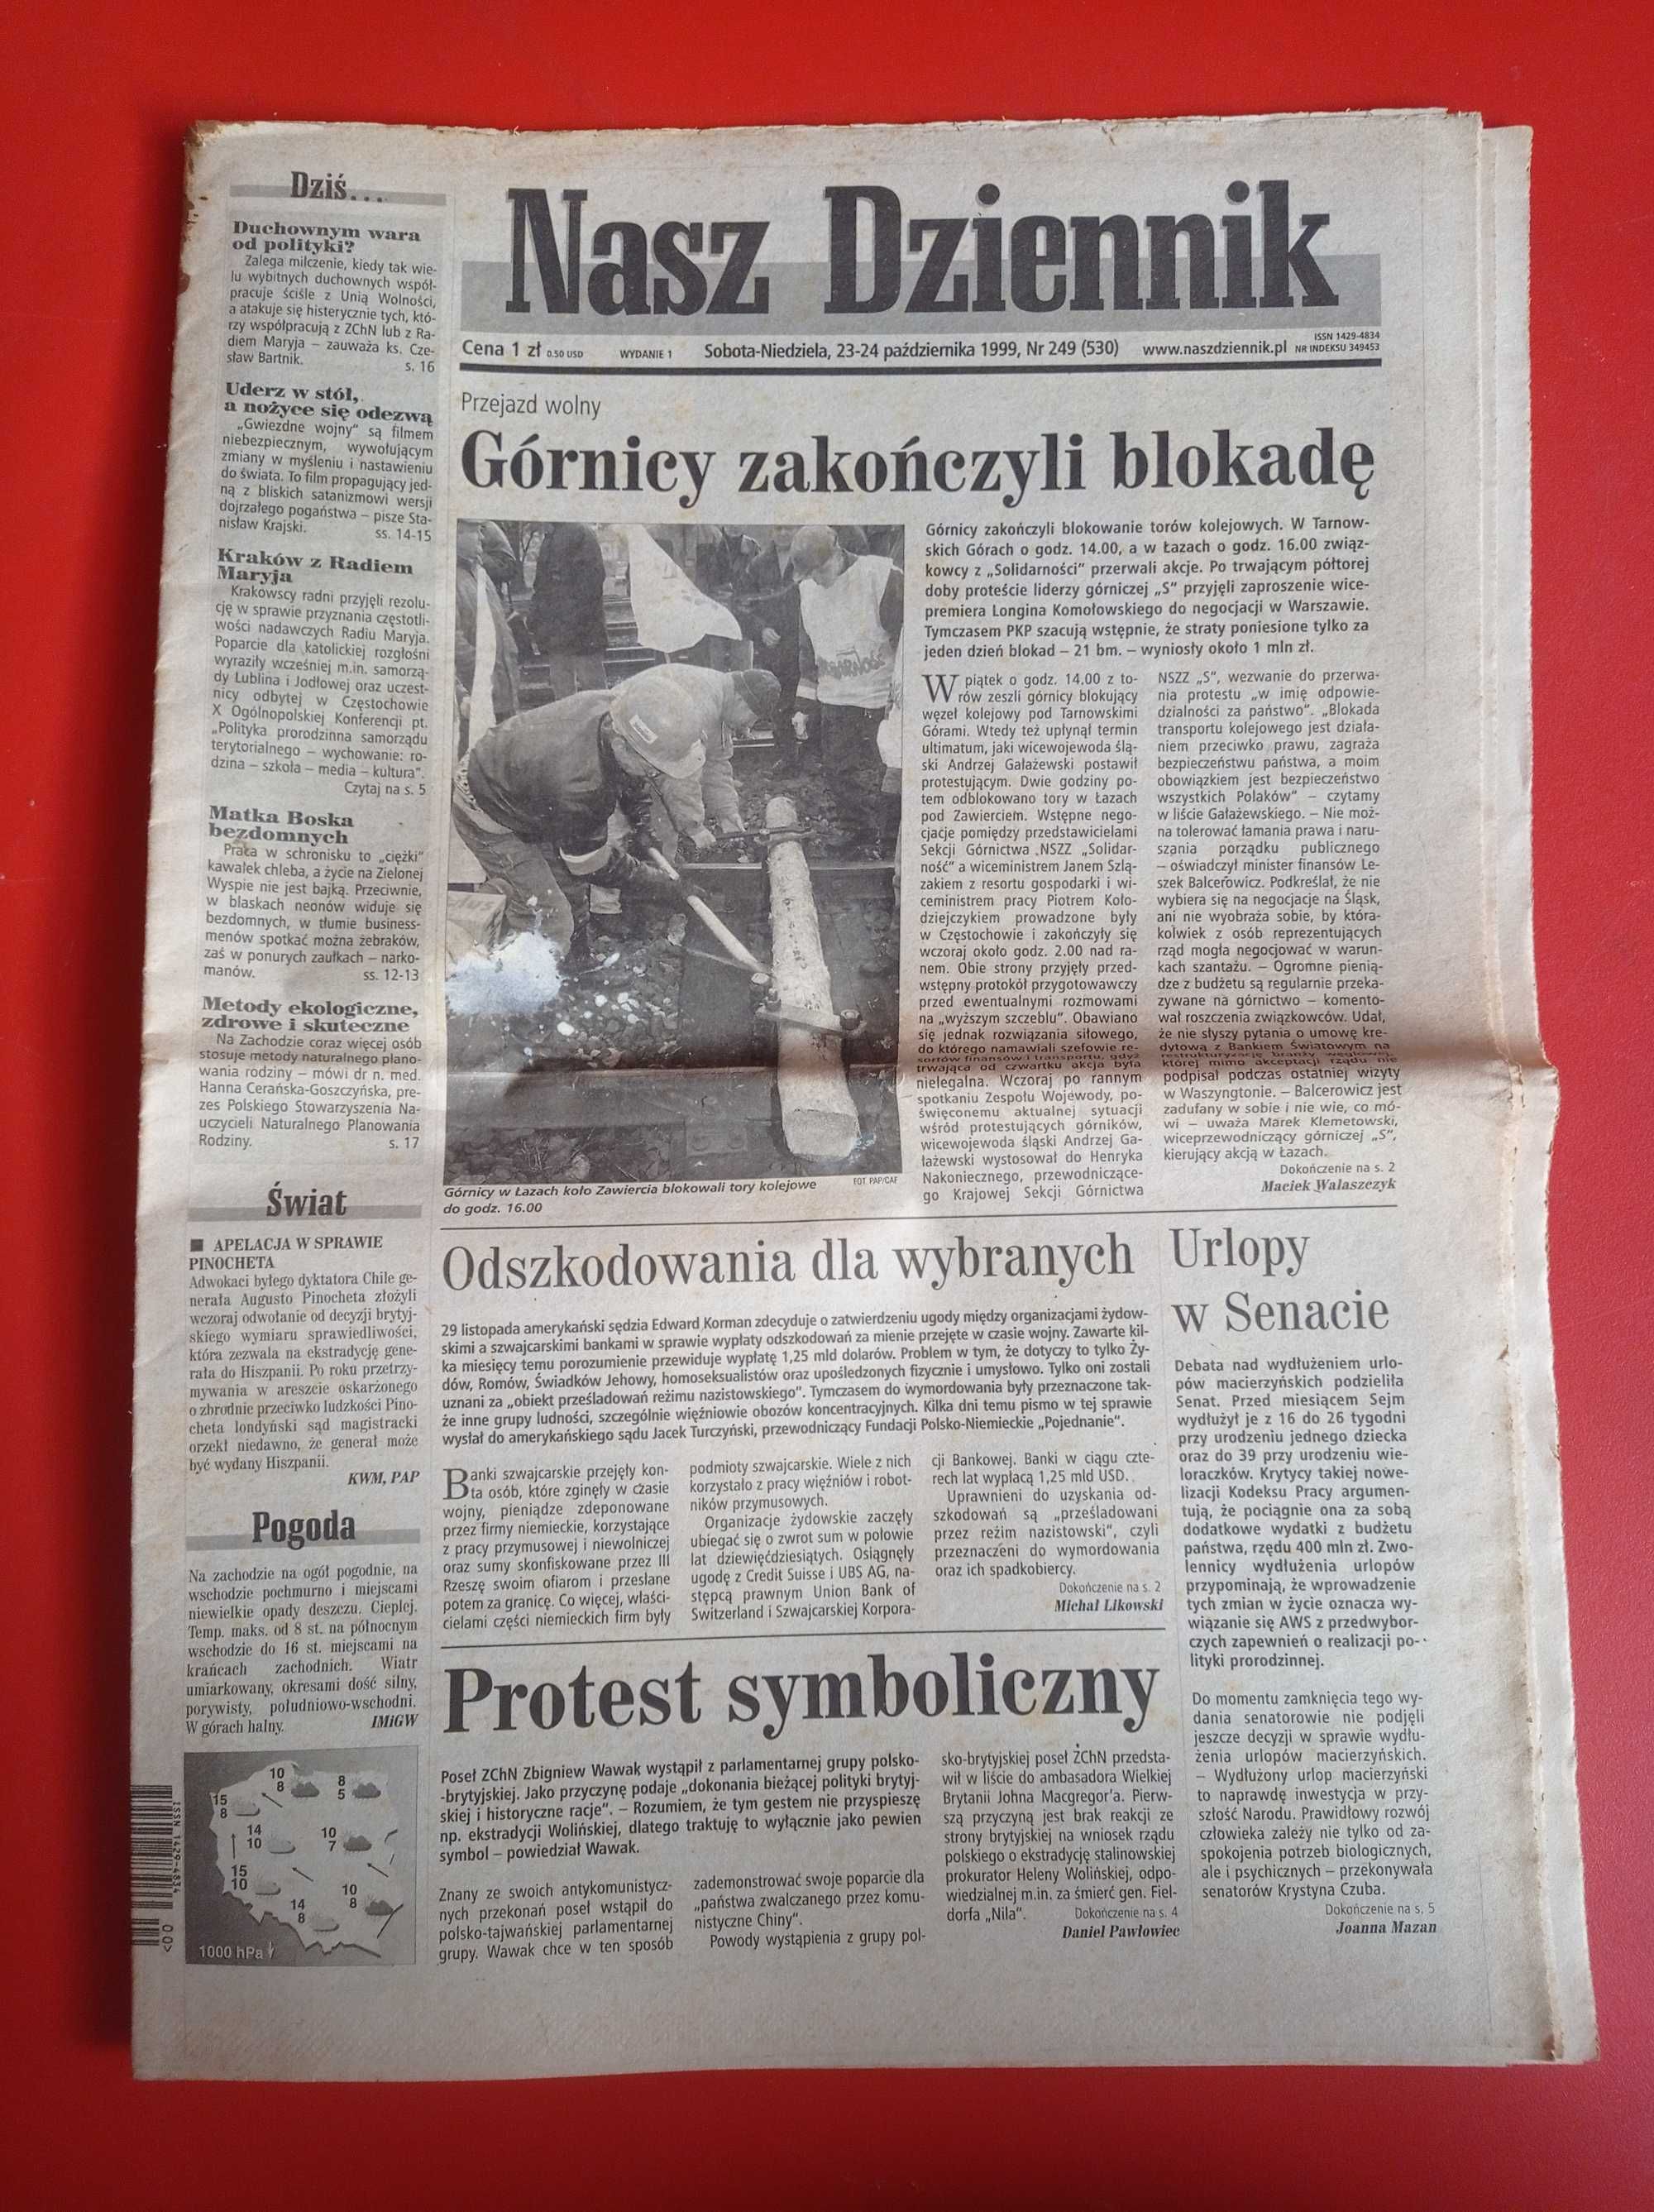 Nasz Dziennik, nr 249/1999, 23-24 października 1999